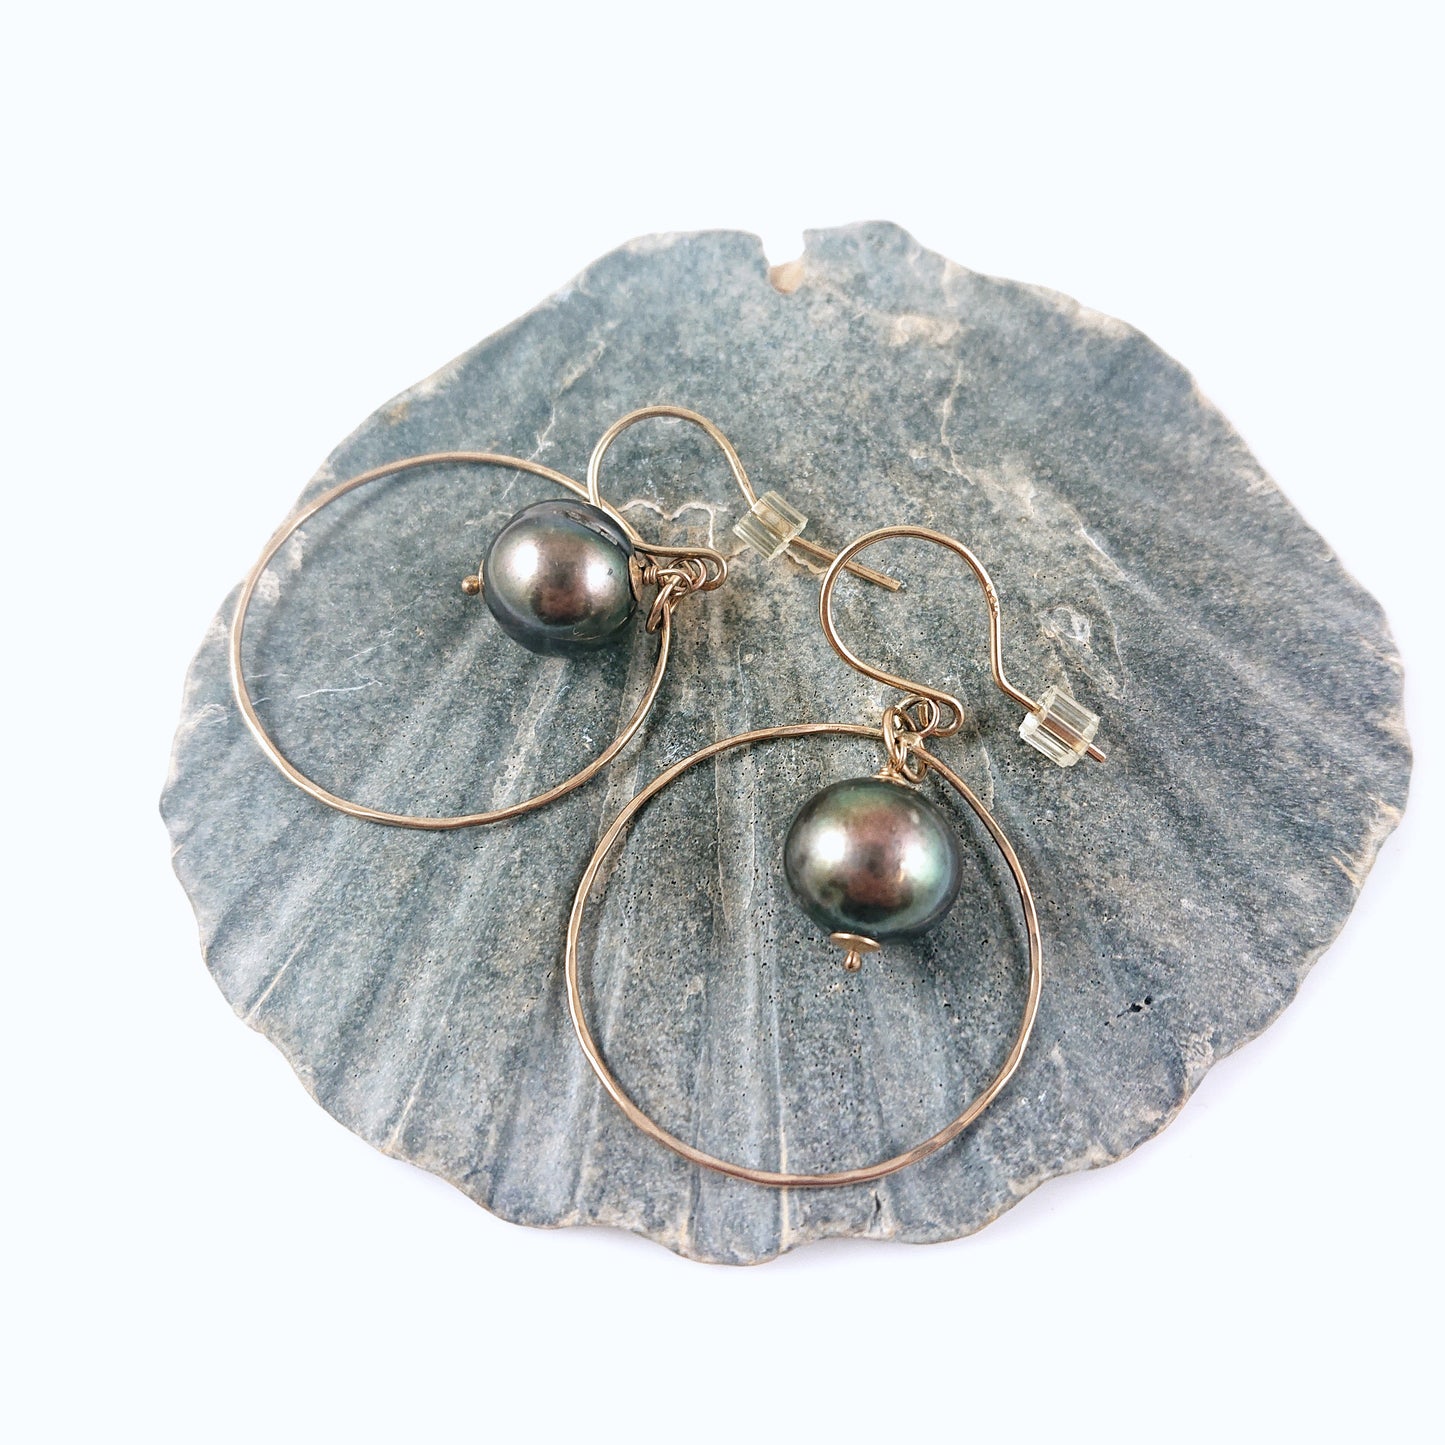 9ct Gold and Pearl Earrings - Karen Morrison Jewellery